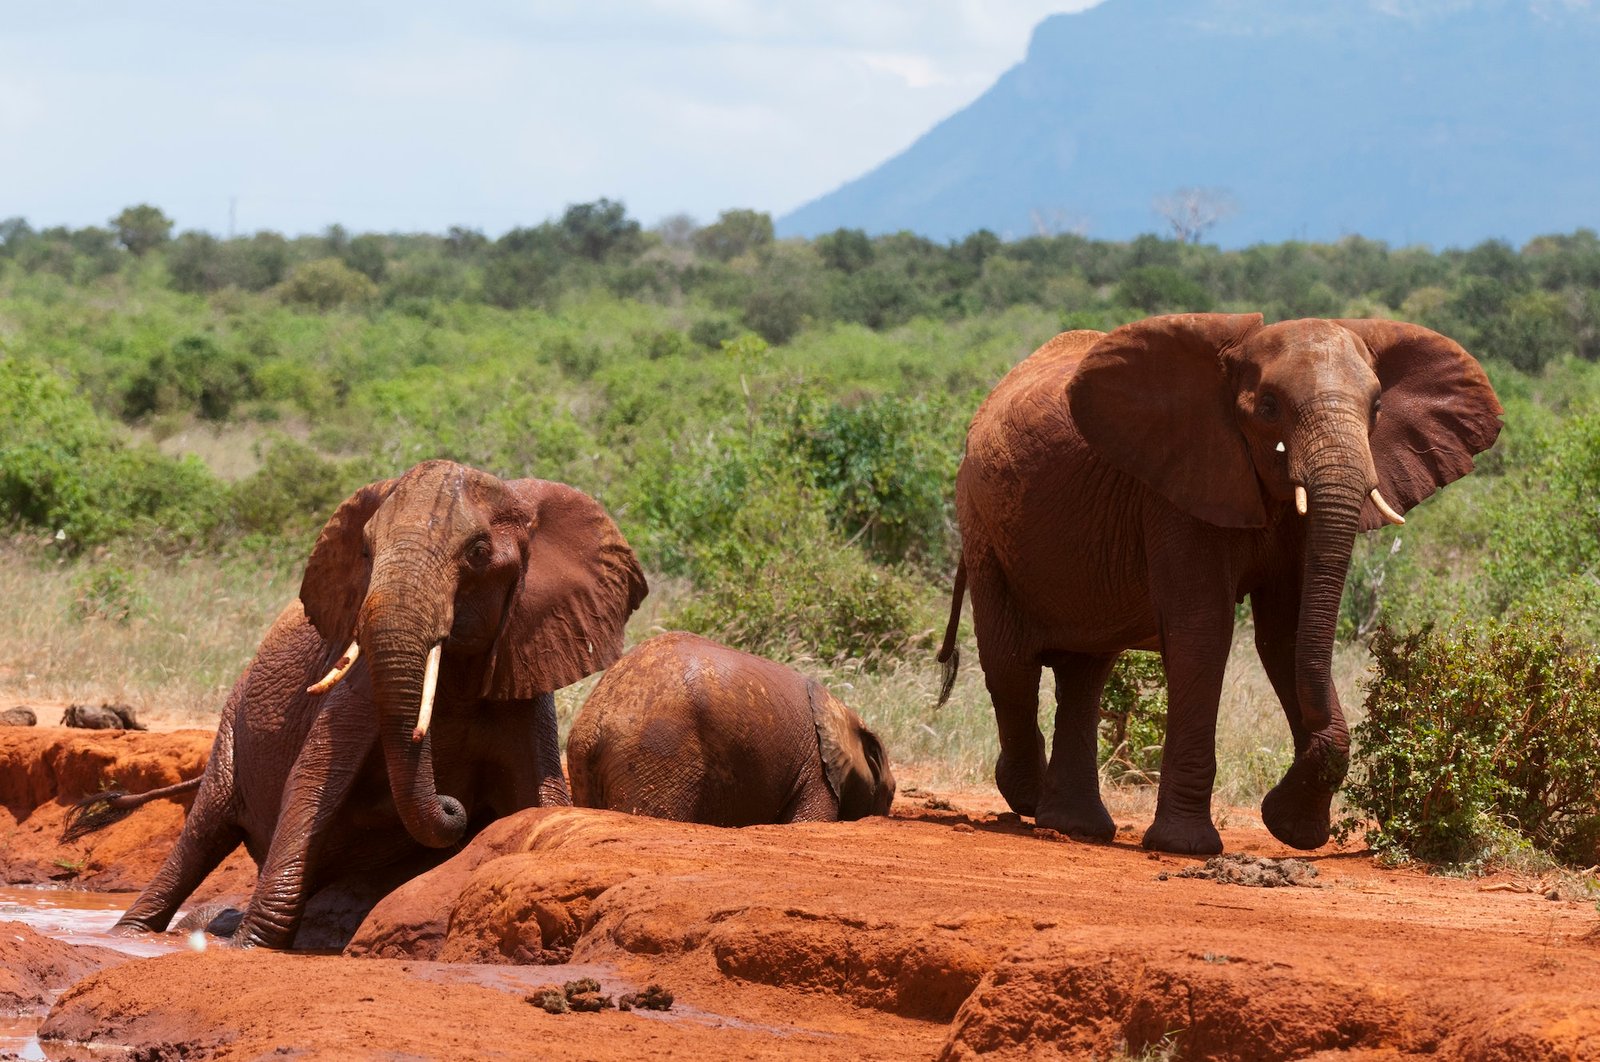 Elephants (Loxodonta africana) helping calf trapped in mud, Tsavo East National Park, Kenya